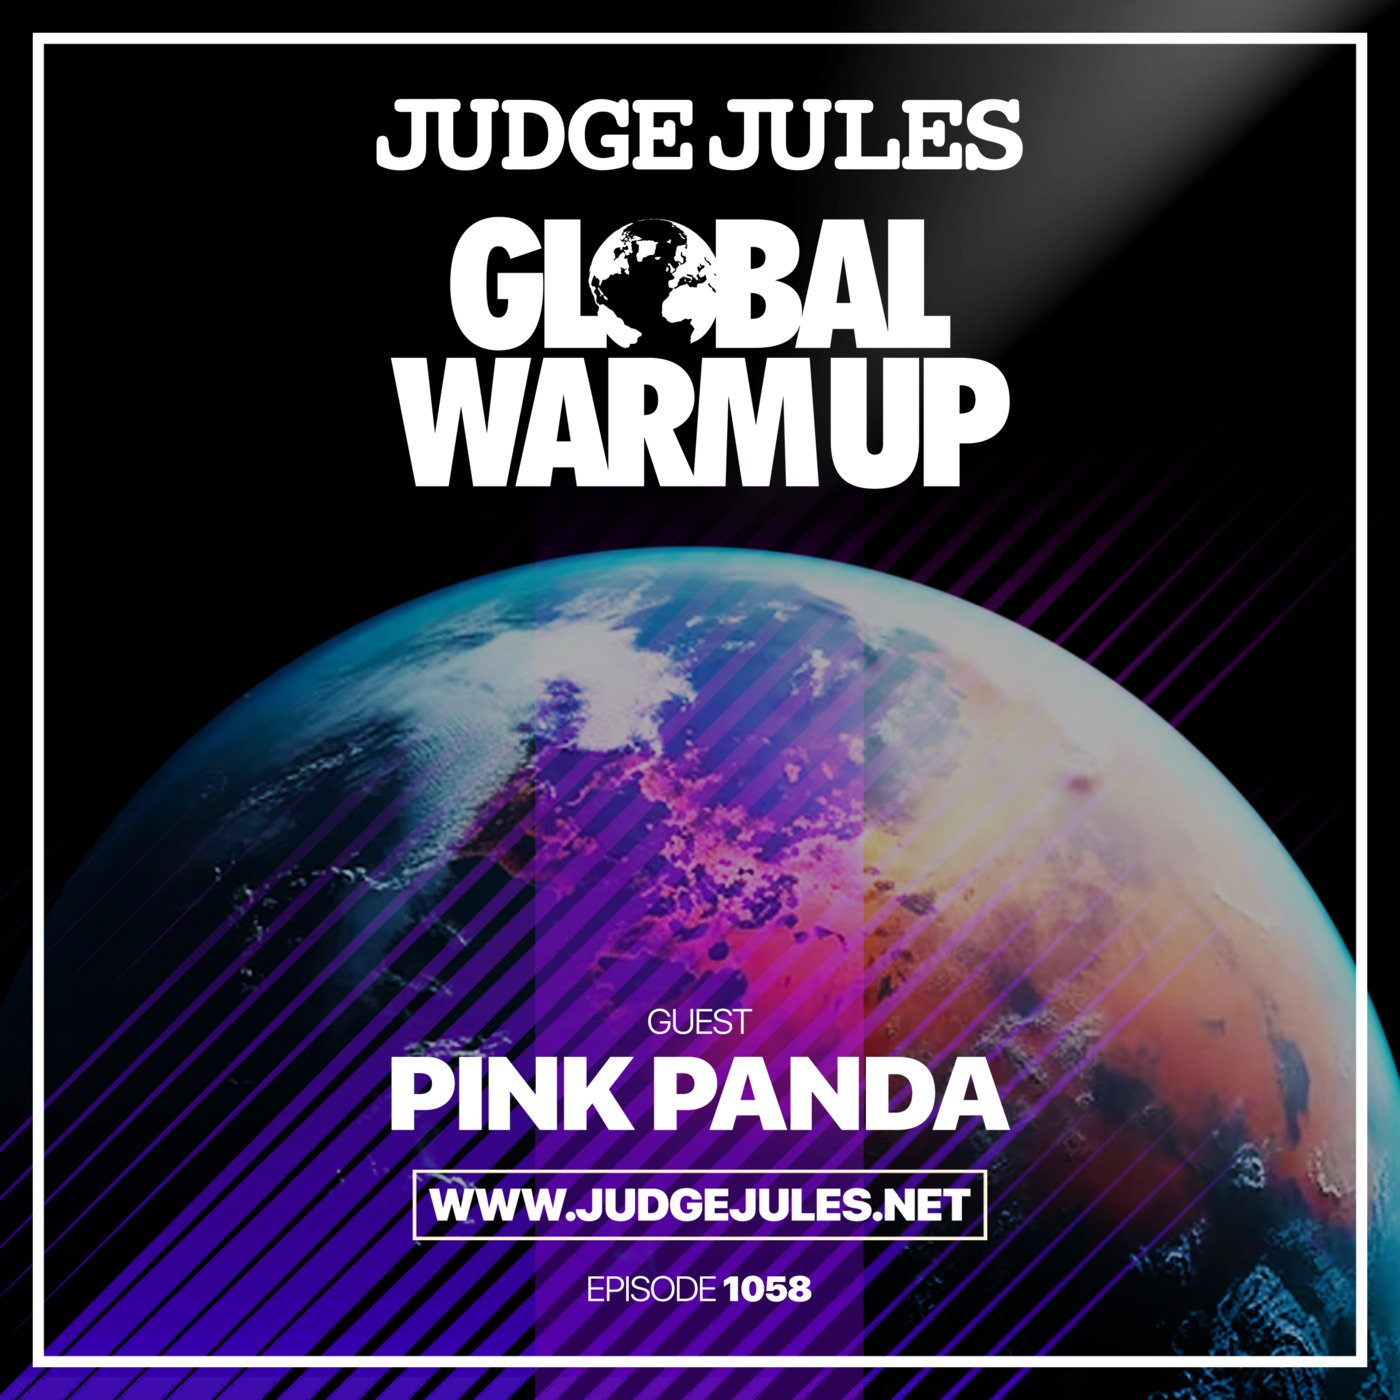 Episode 1058: JUDGE JULES PRESENTS THE GLOBAL WARM UP EPISODE 1058